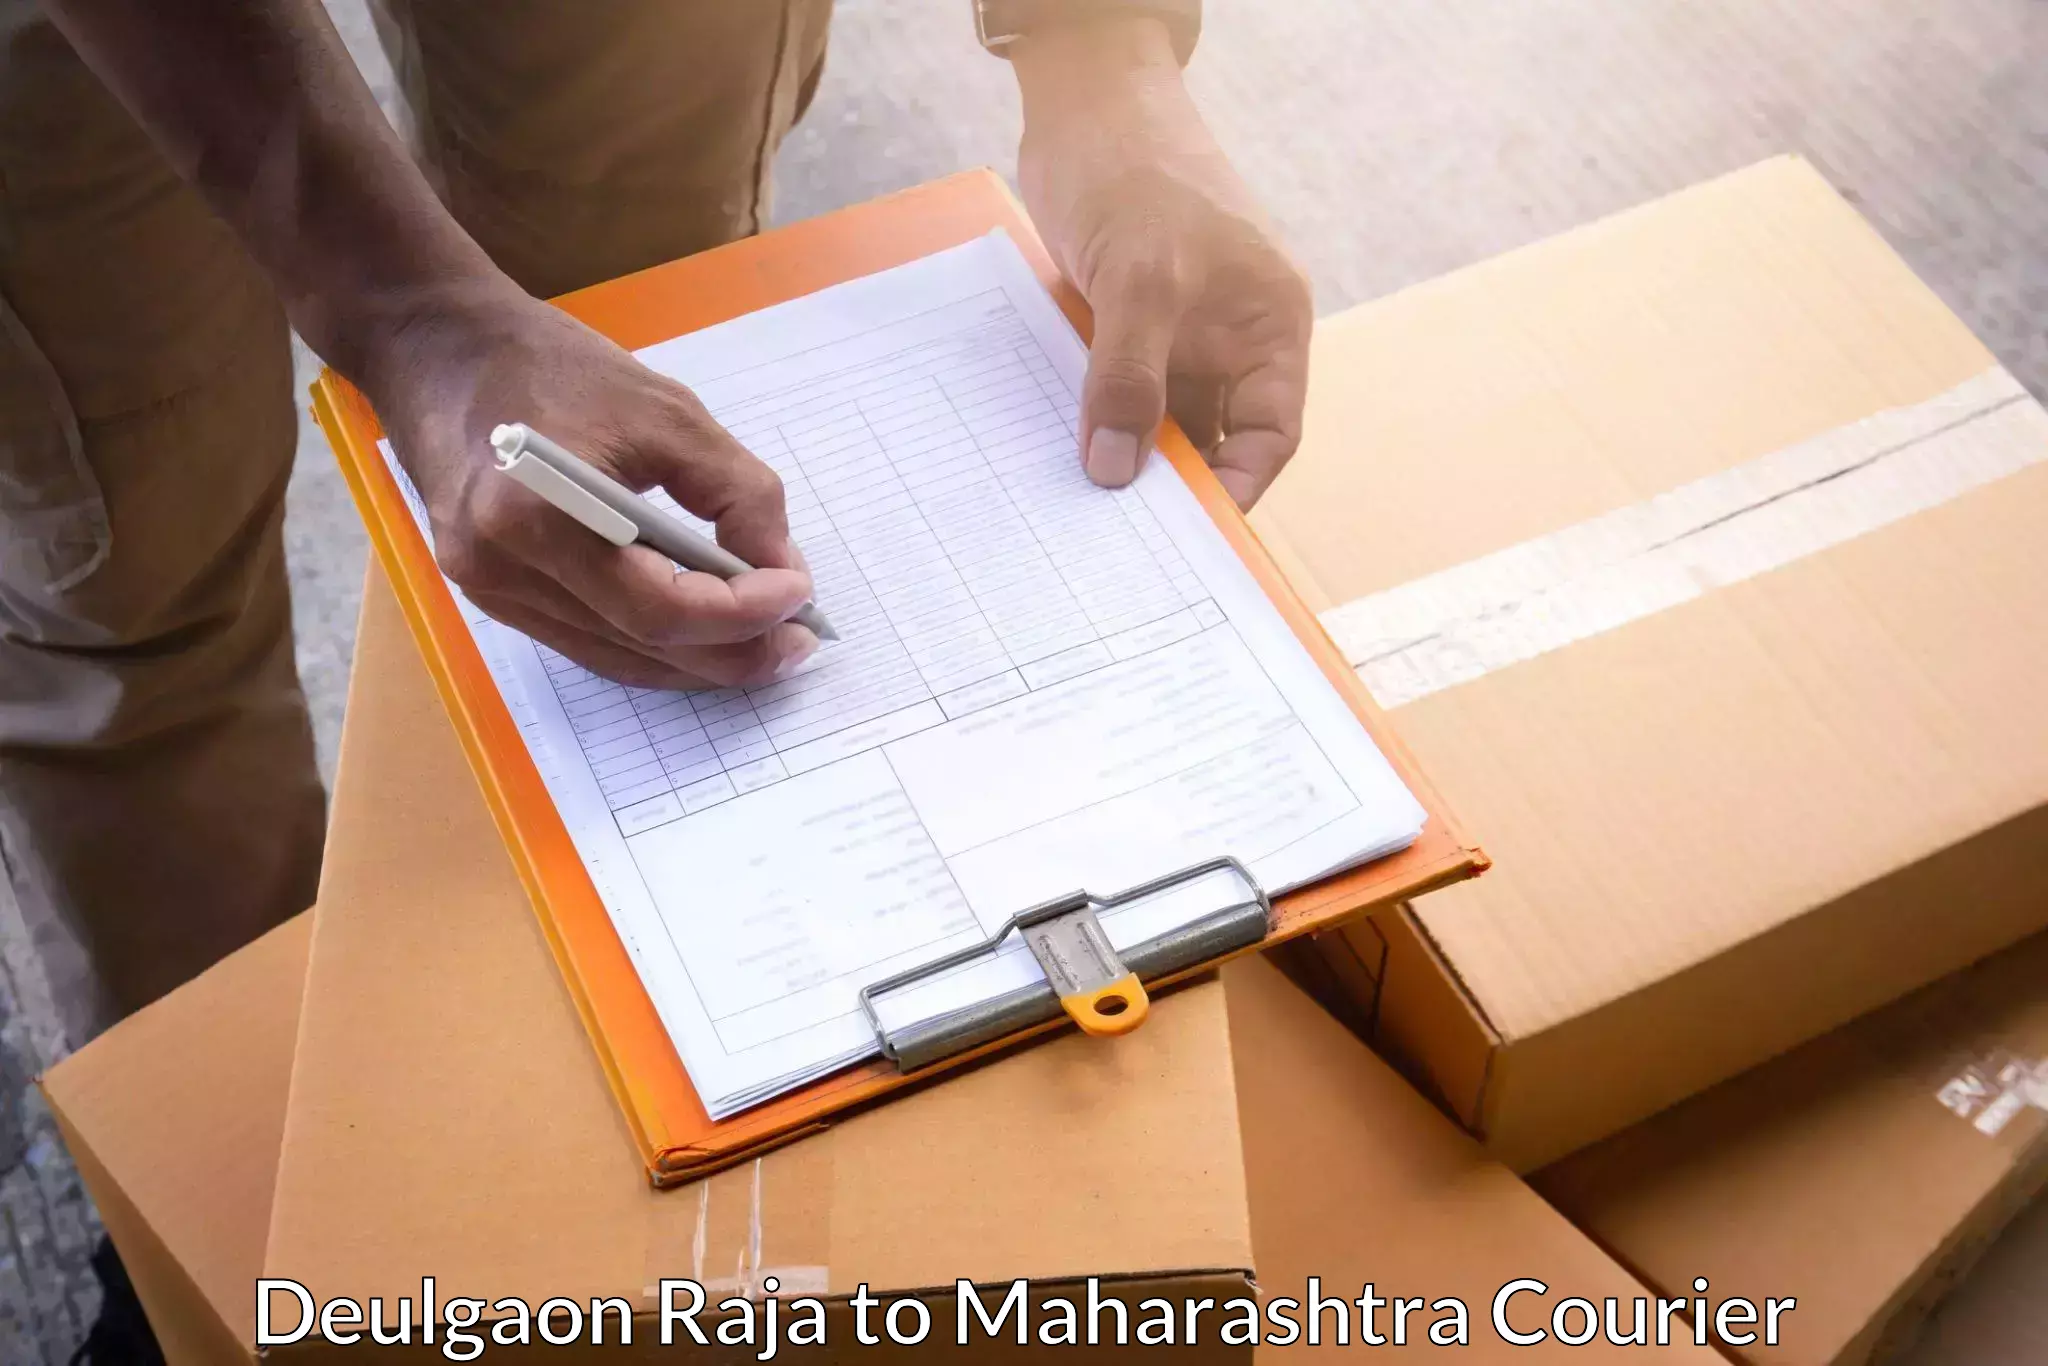 Door-to-door freight service Deulgaon Raja to Maharashtra